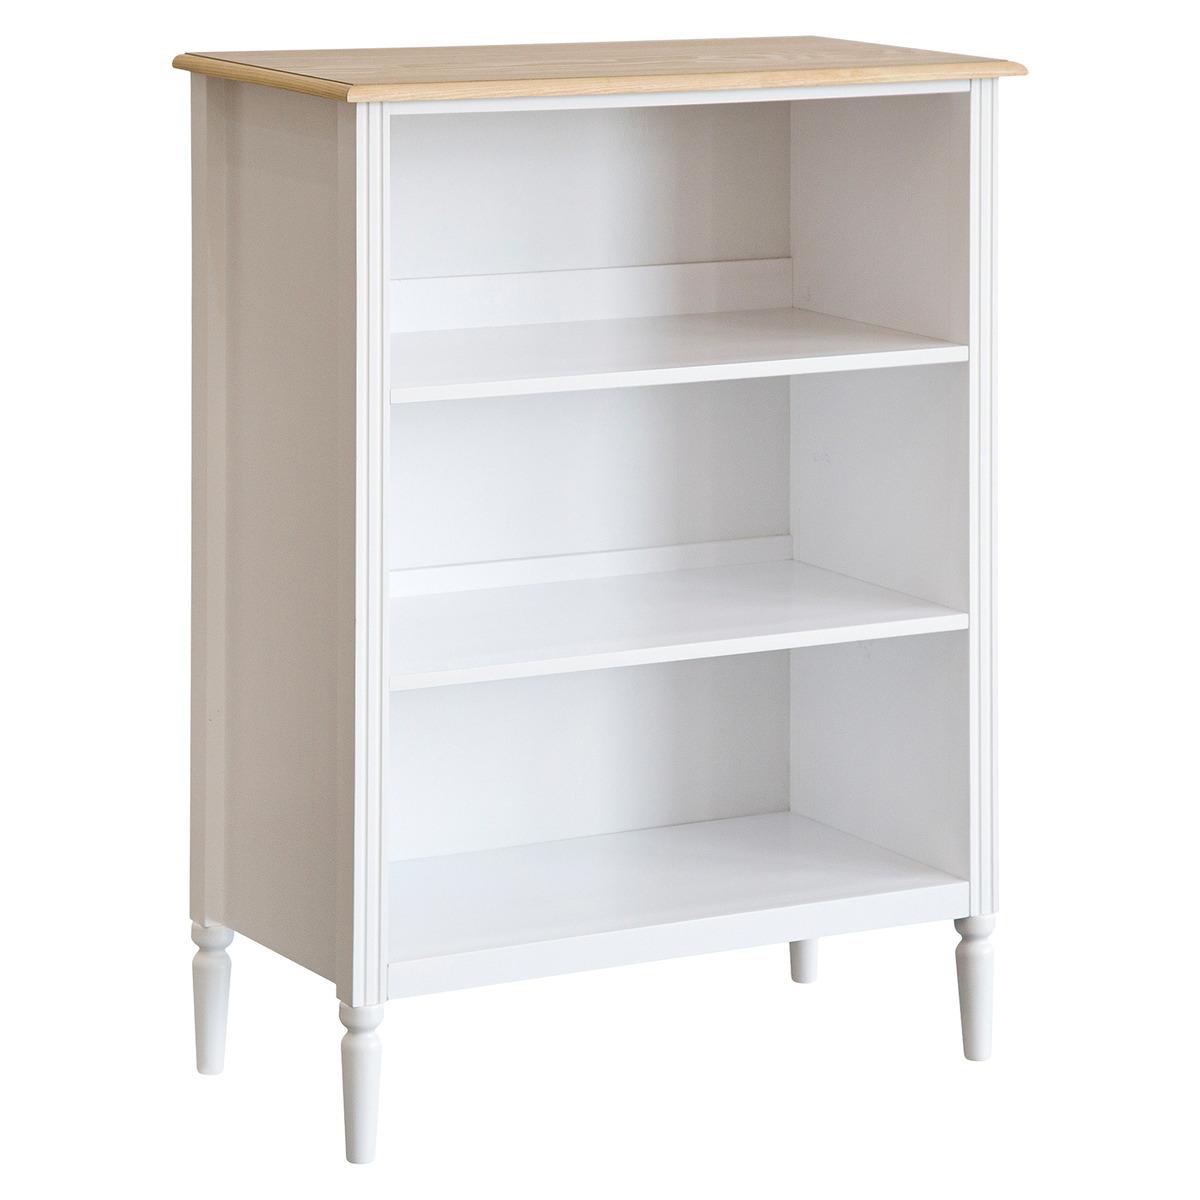 Shelf - Deco, Furniture for Professionals